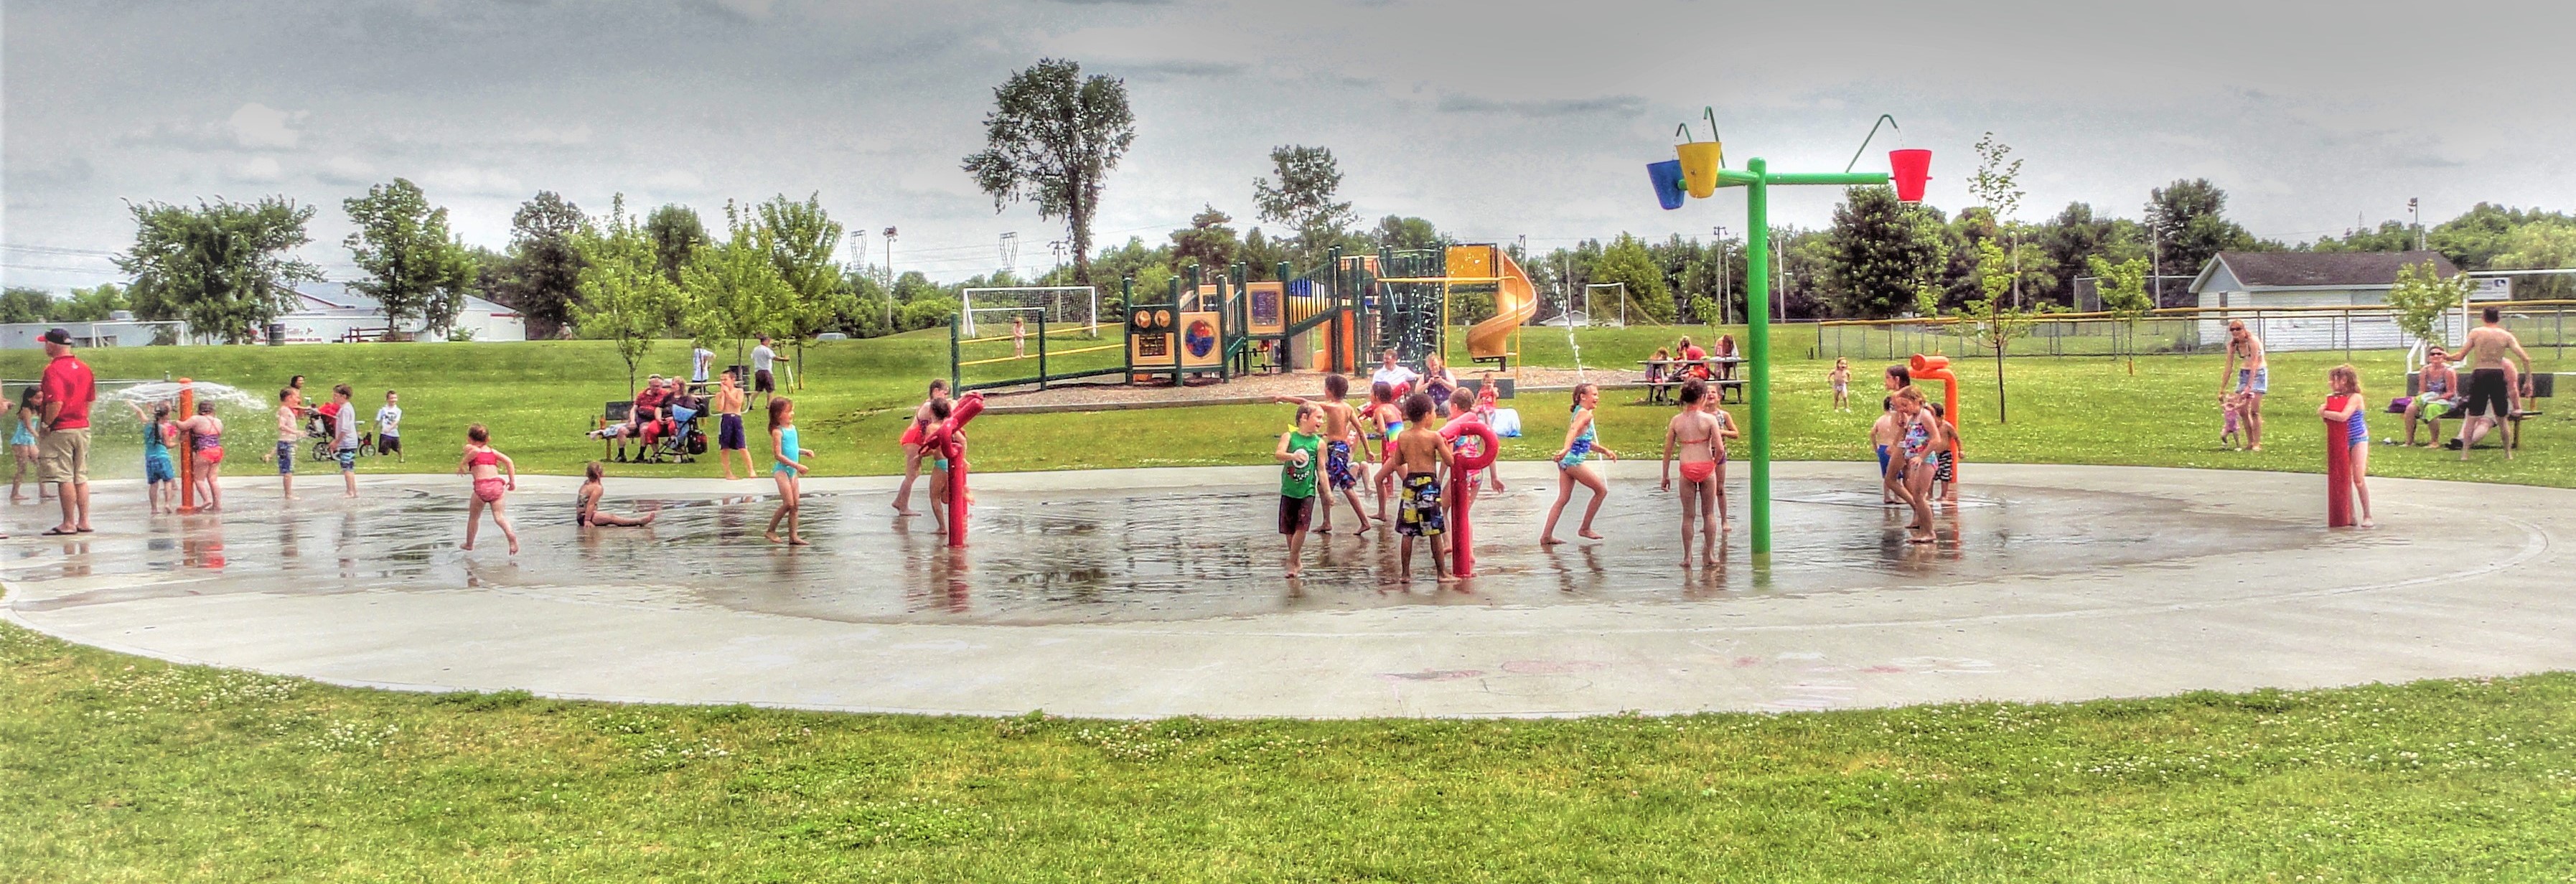 Children playing in in a Splash Pad 